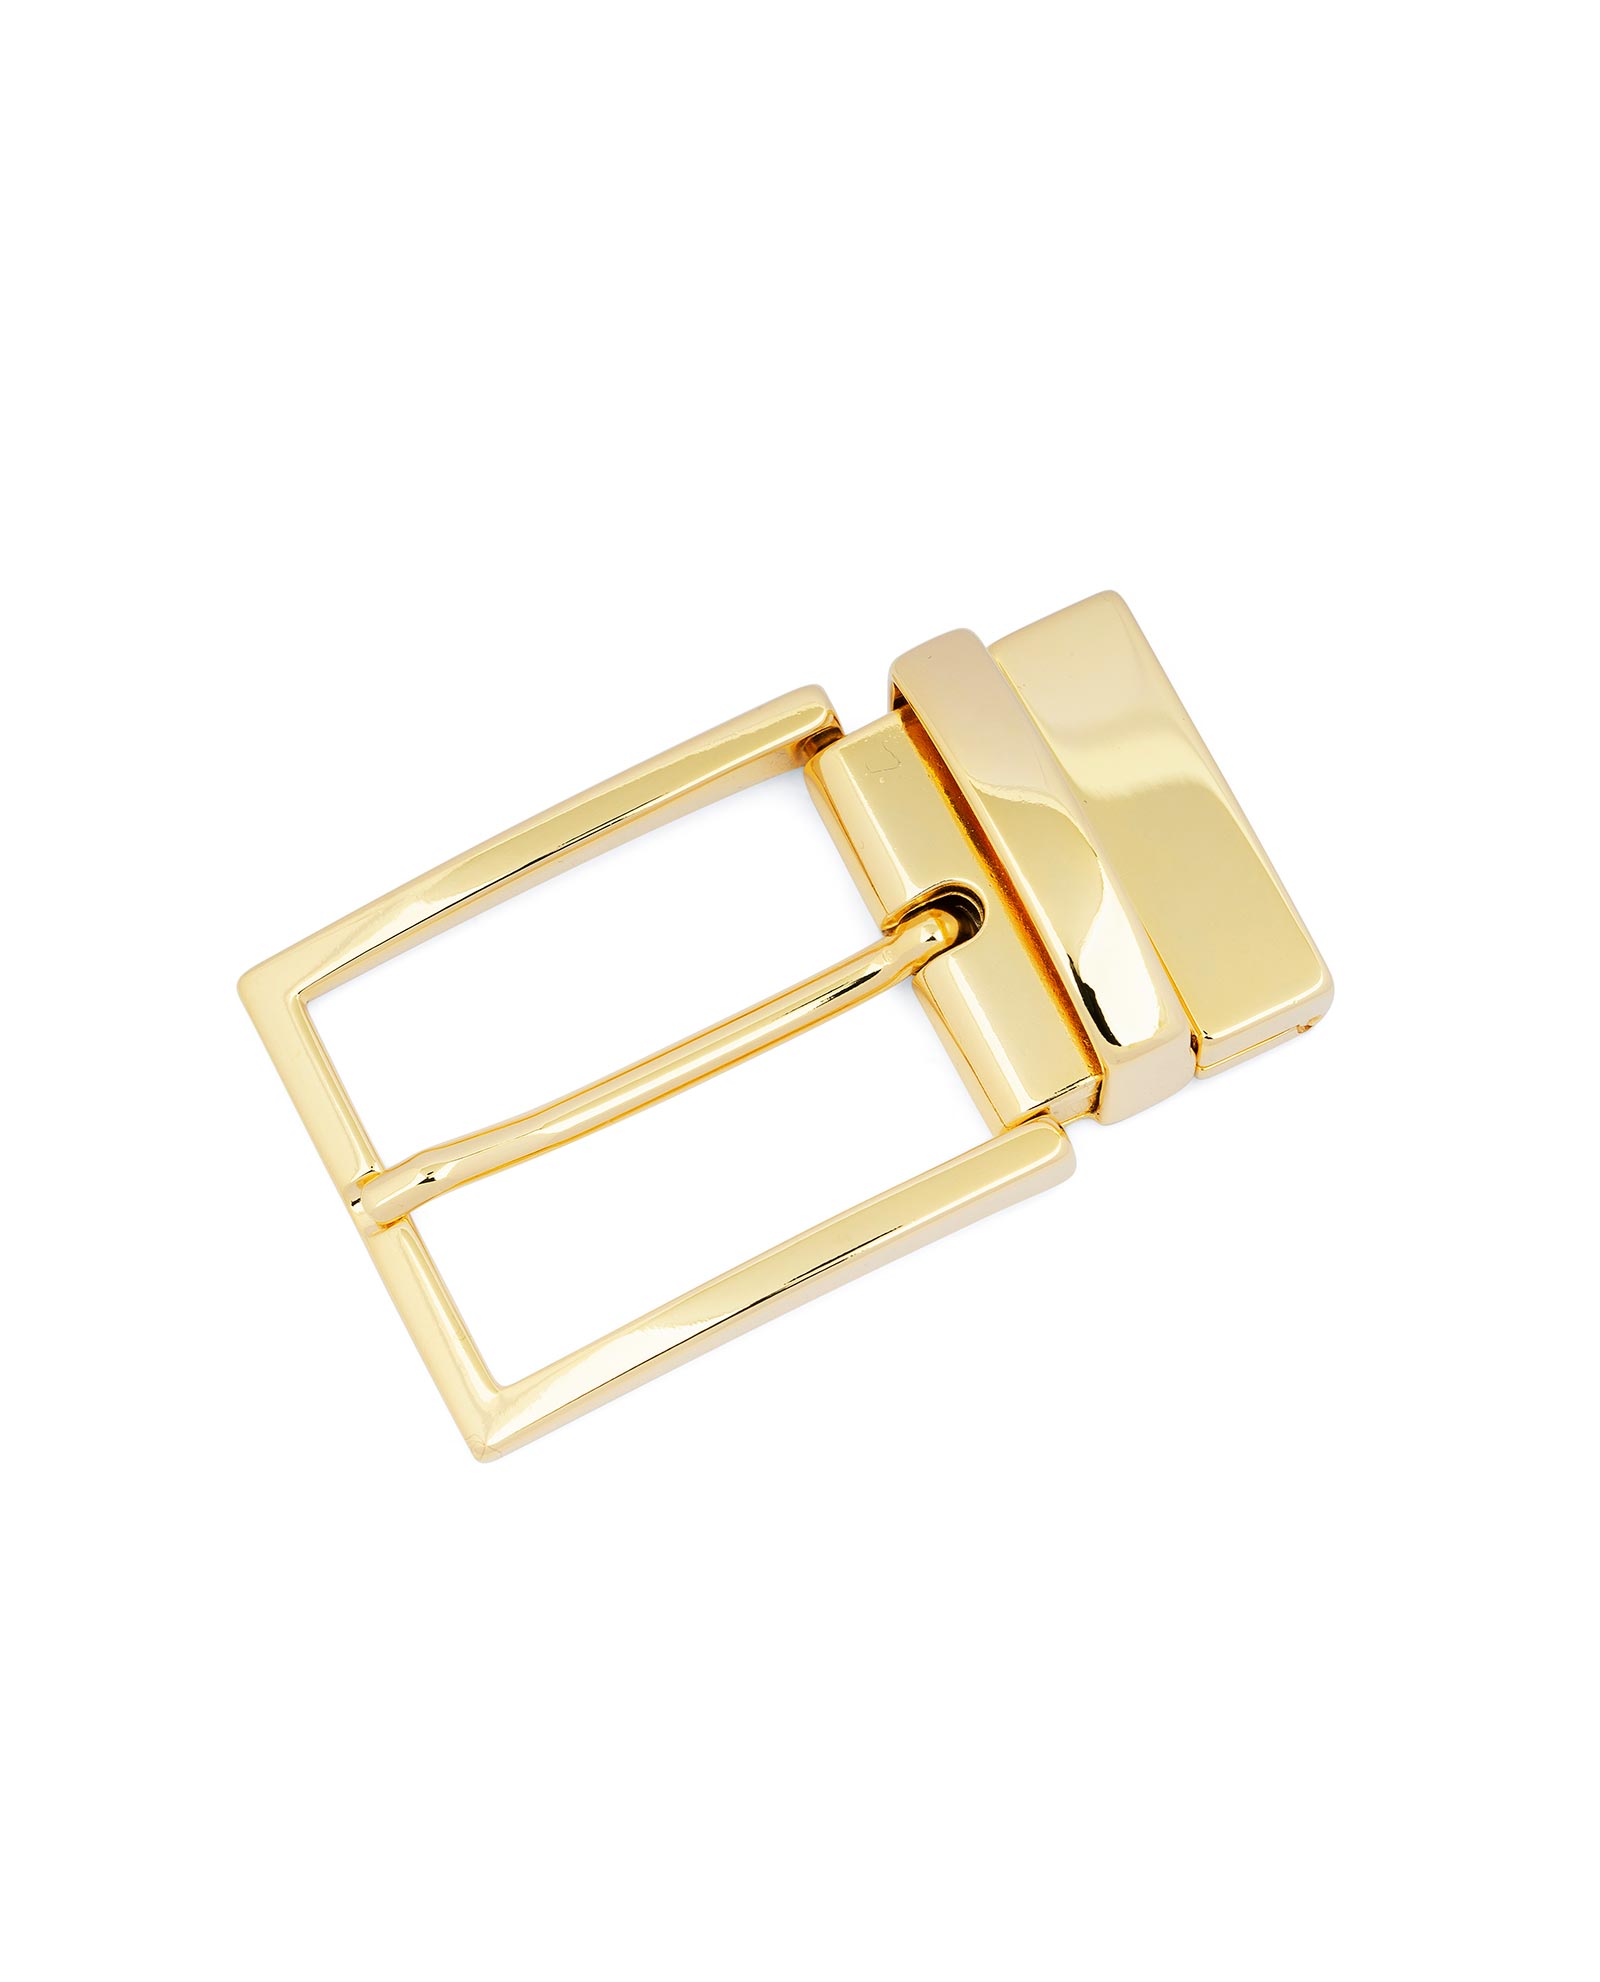 magneet Slang Vooruitgaan Buy Reversible Gold Belt Buckle For Men | LeatherBeltsOnline.com